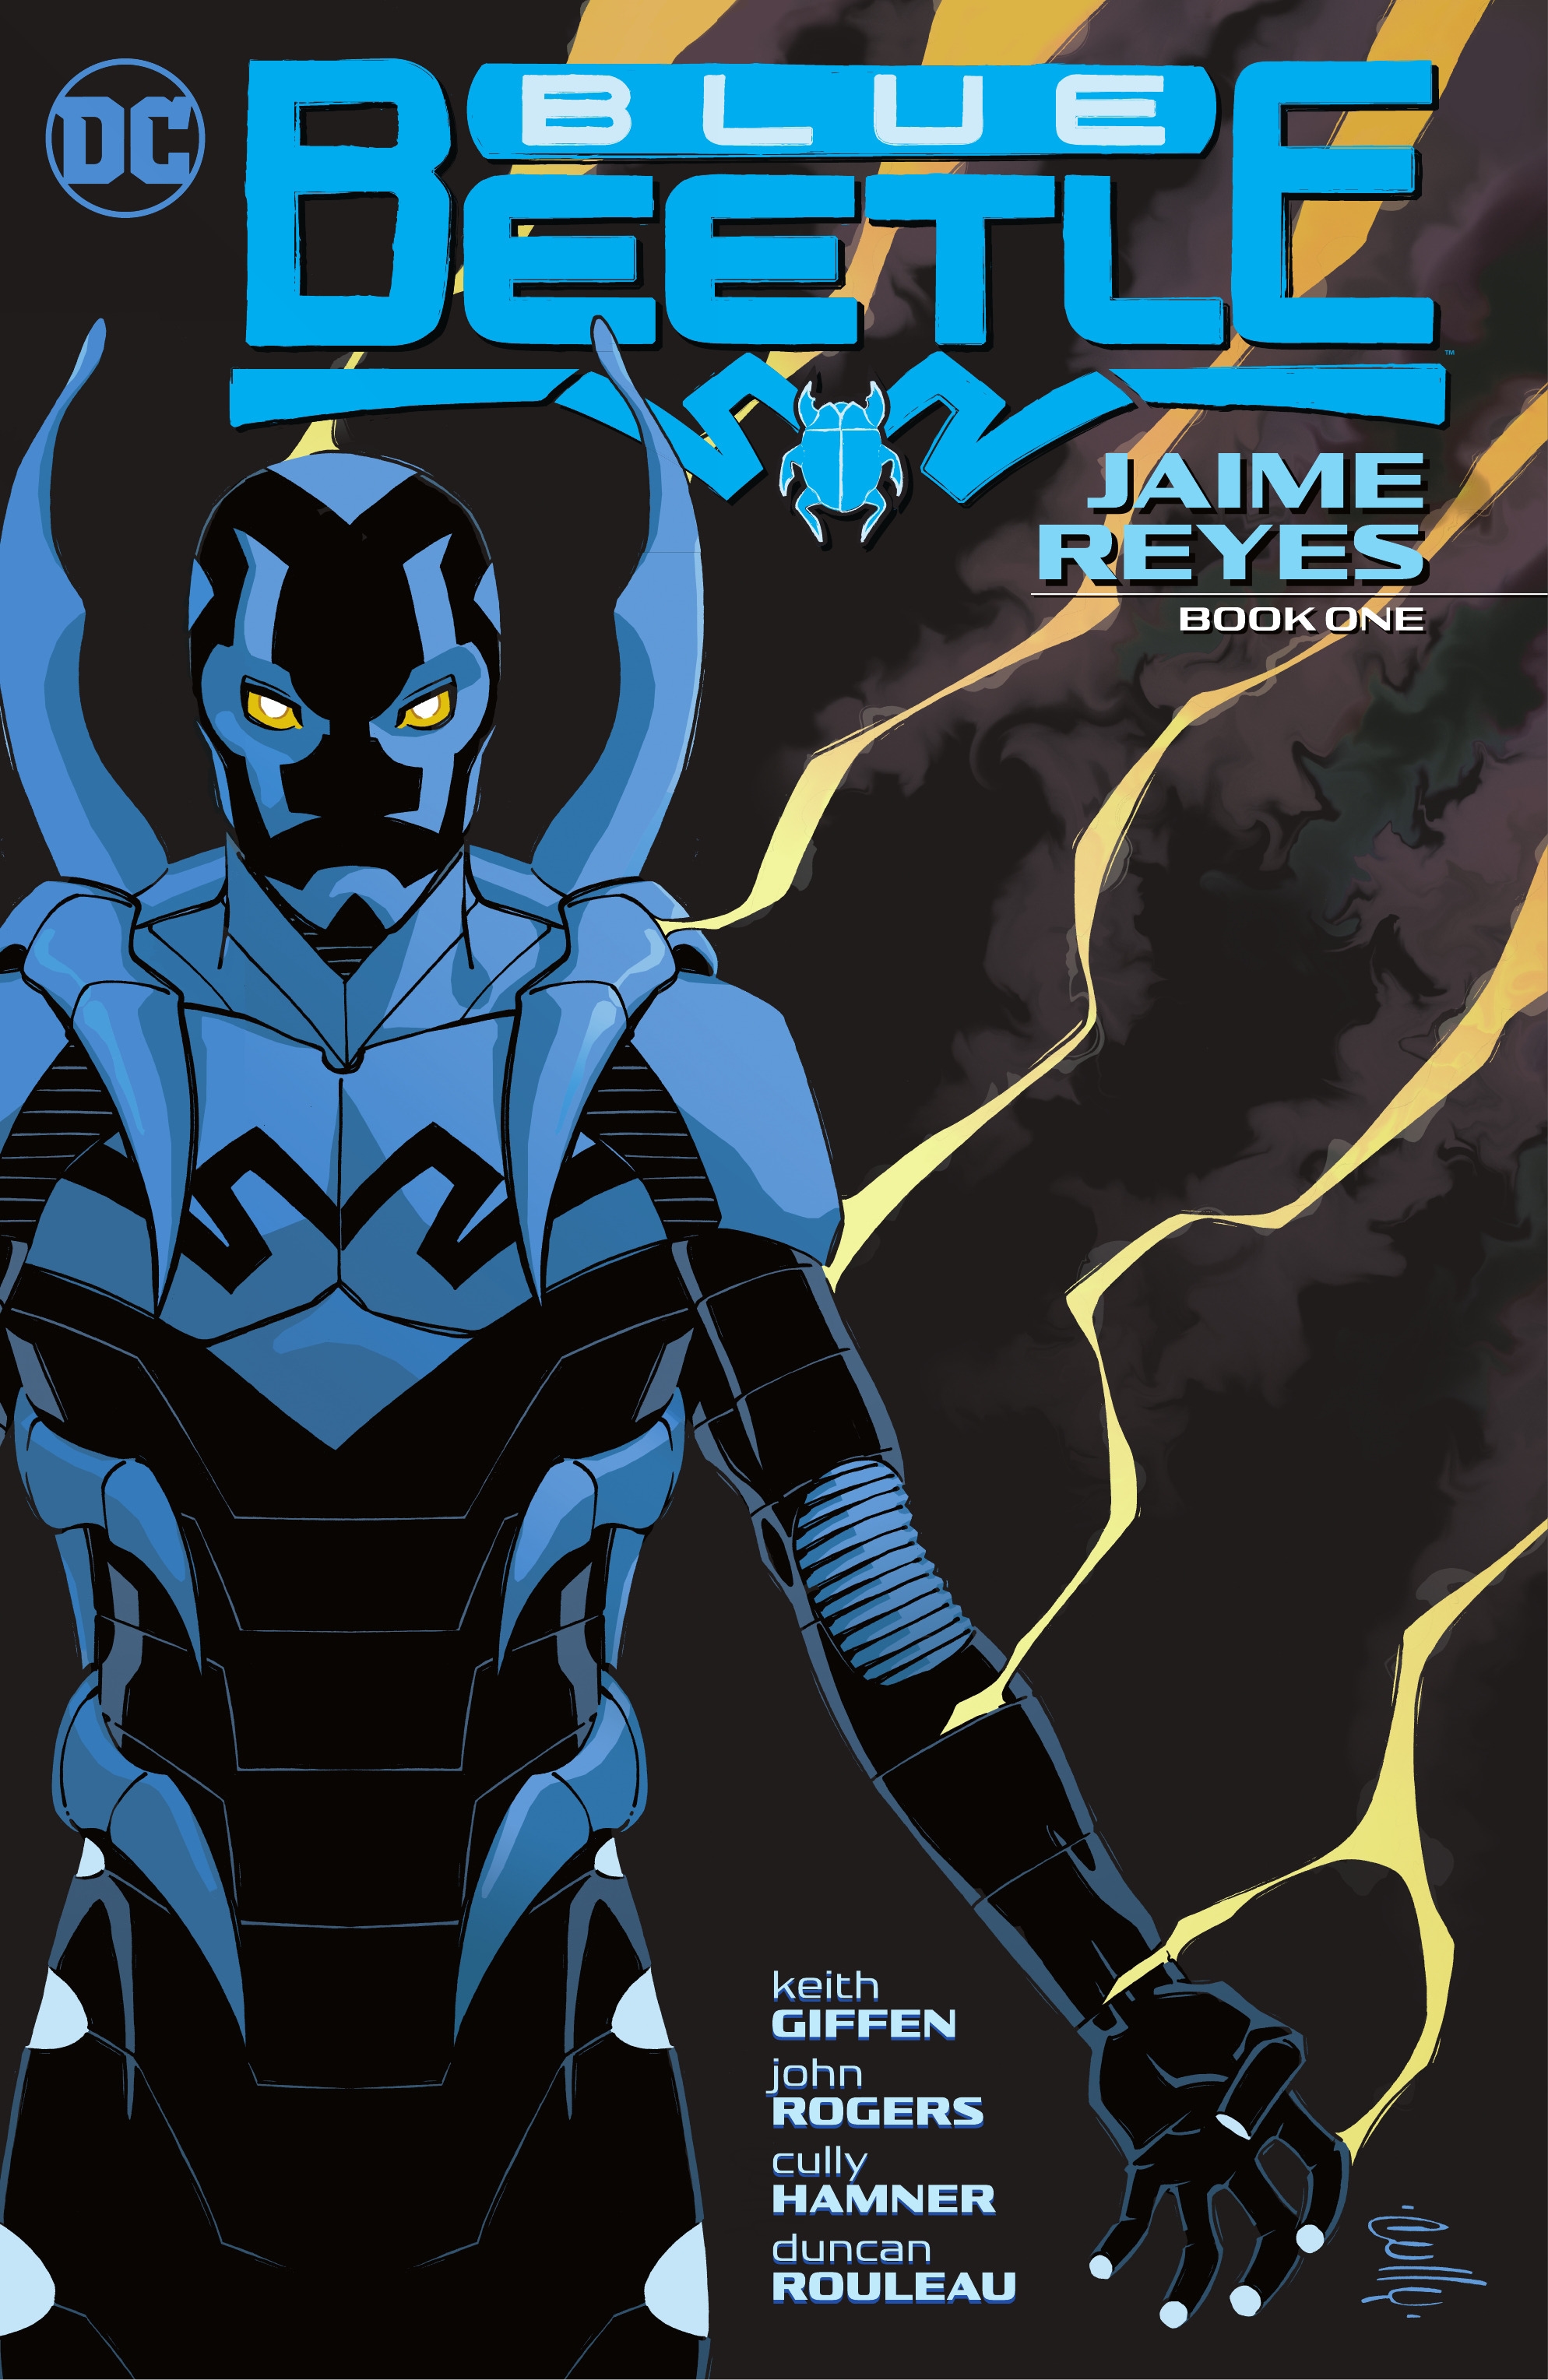 Hey Hey Jaime Reyes Blue Beetle Blue Beetle Dc Comics Dc Comics Art